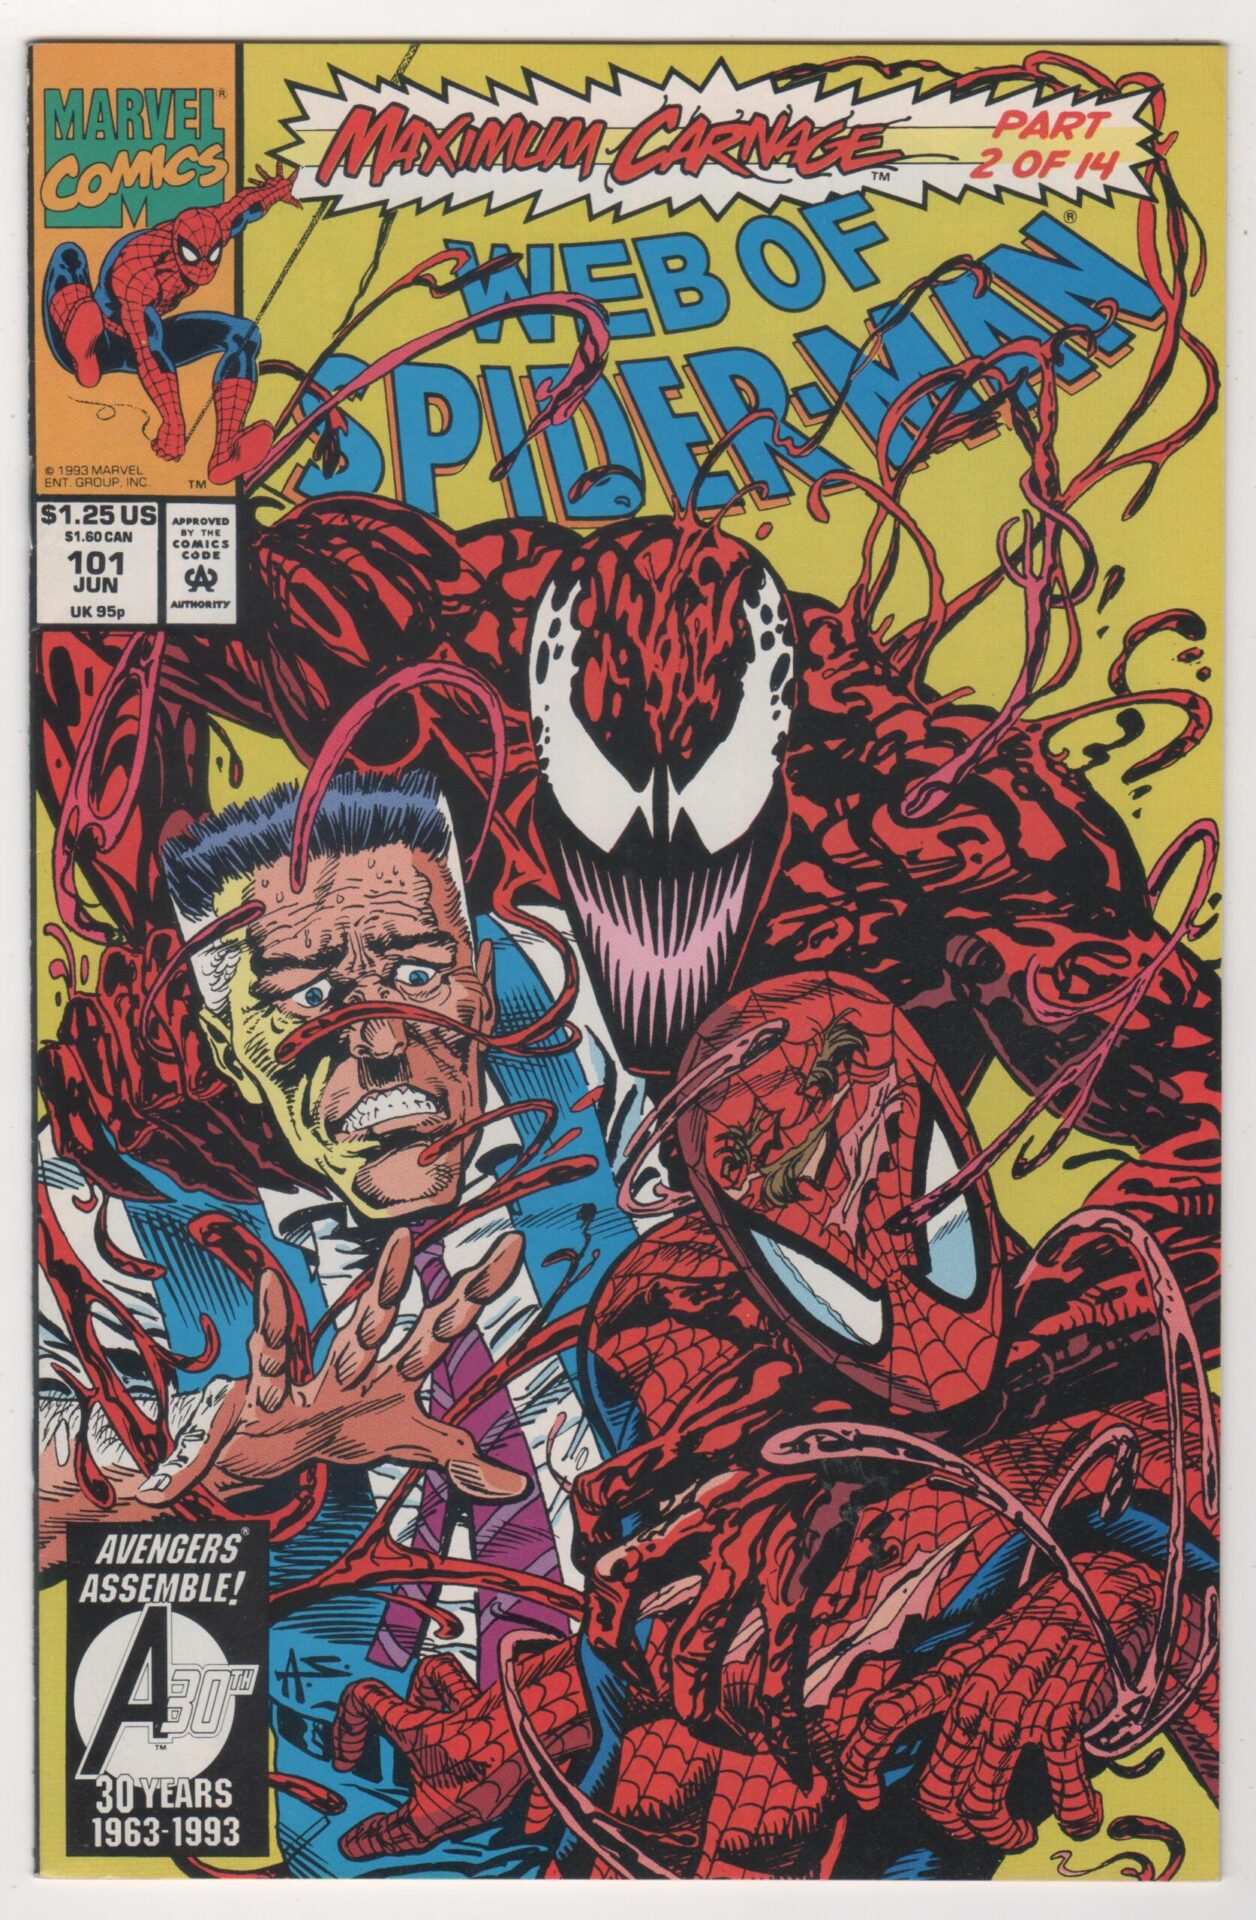 Web of Spider-Man #101 Maximum Carnage Part 2 of 14 Marvel Comics 1993